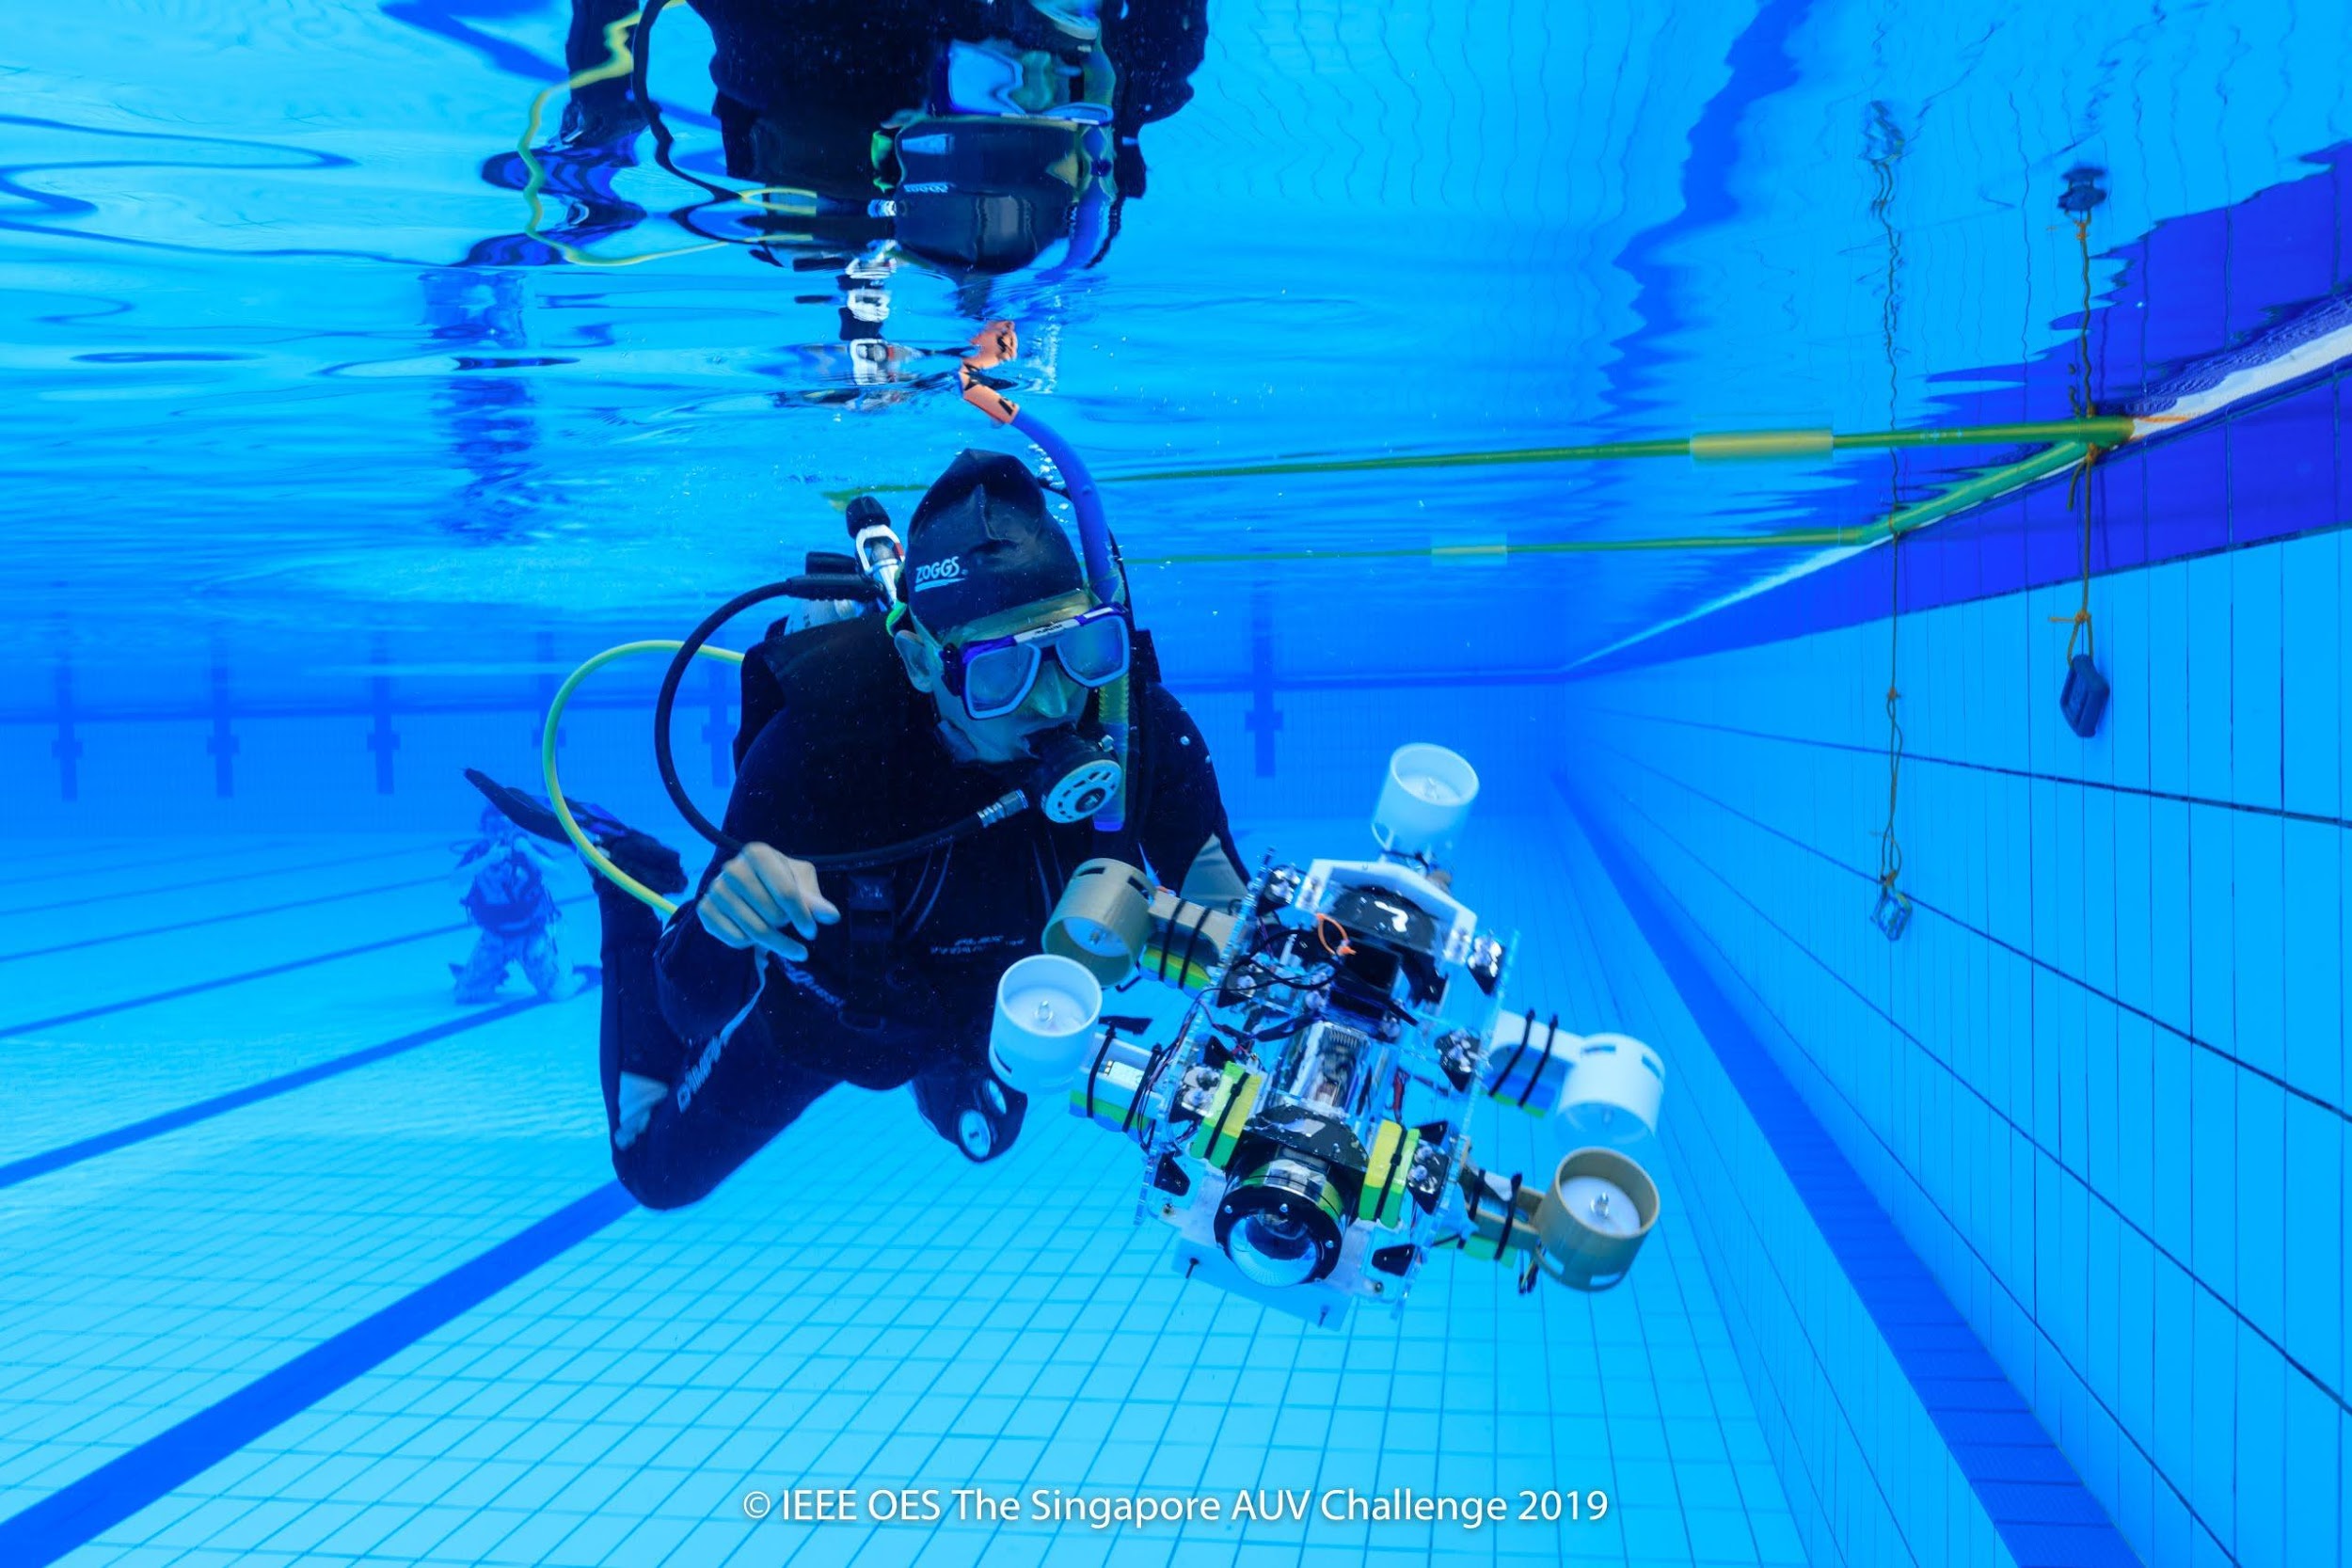 One of the divers at SAUVC, Dr. Mandar Chitre, retrieves Team Bubbles’ (SUTD) AUV